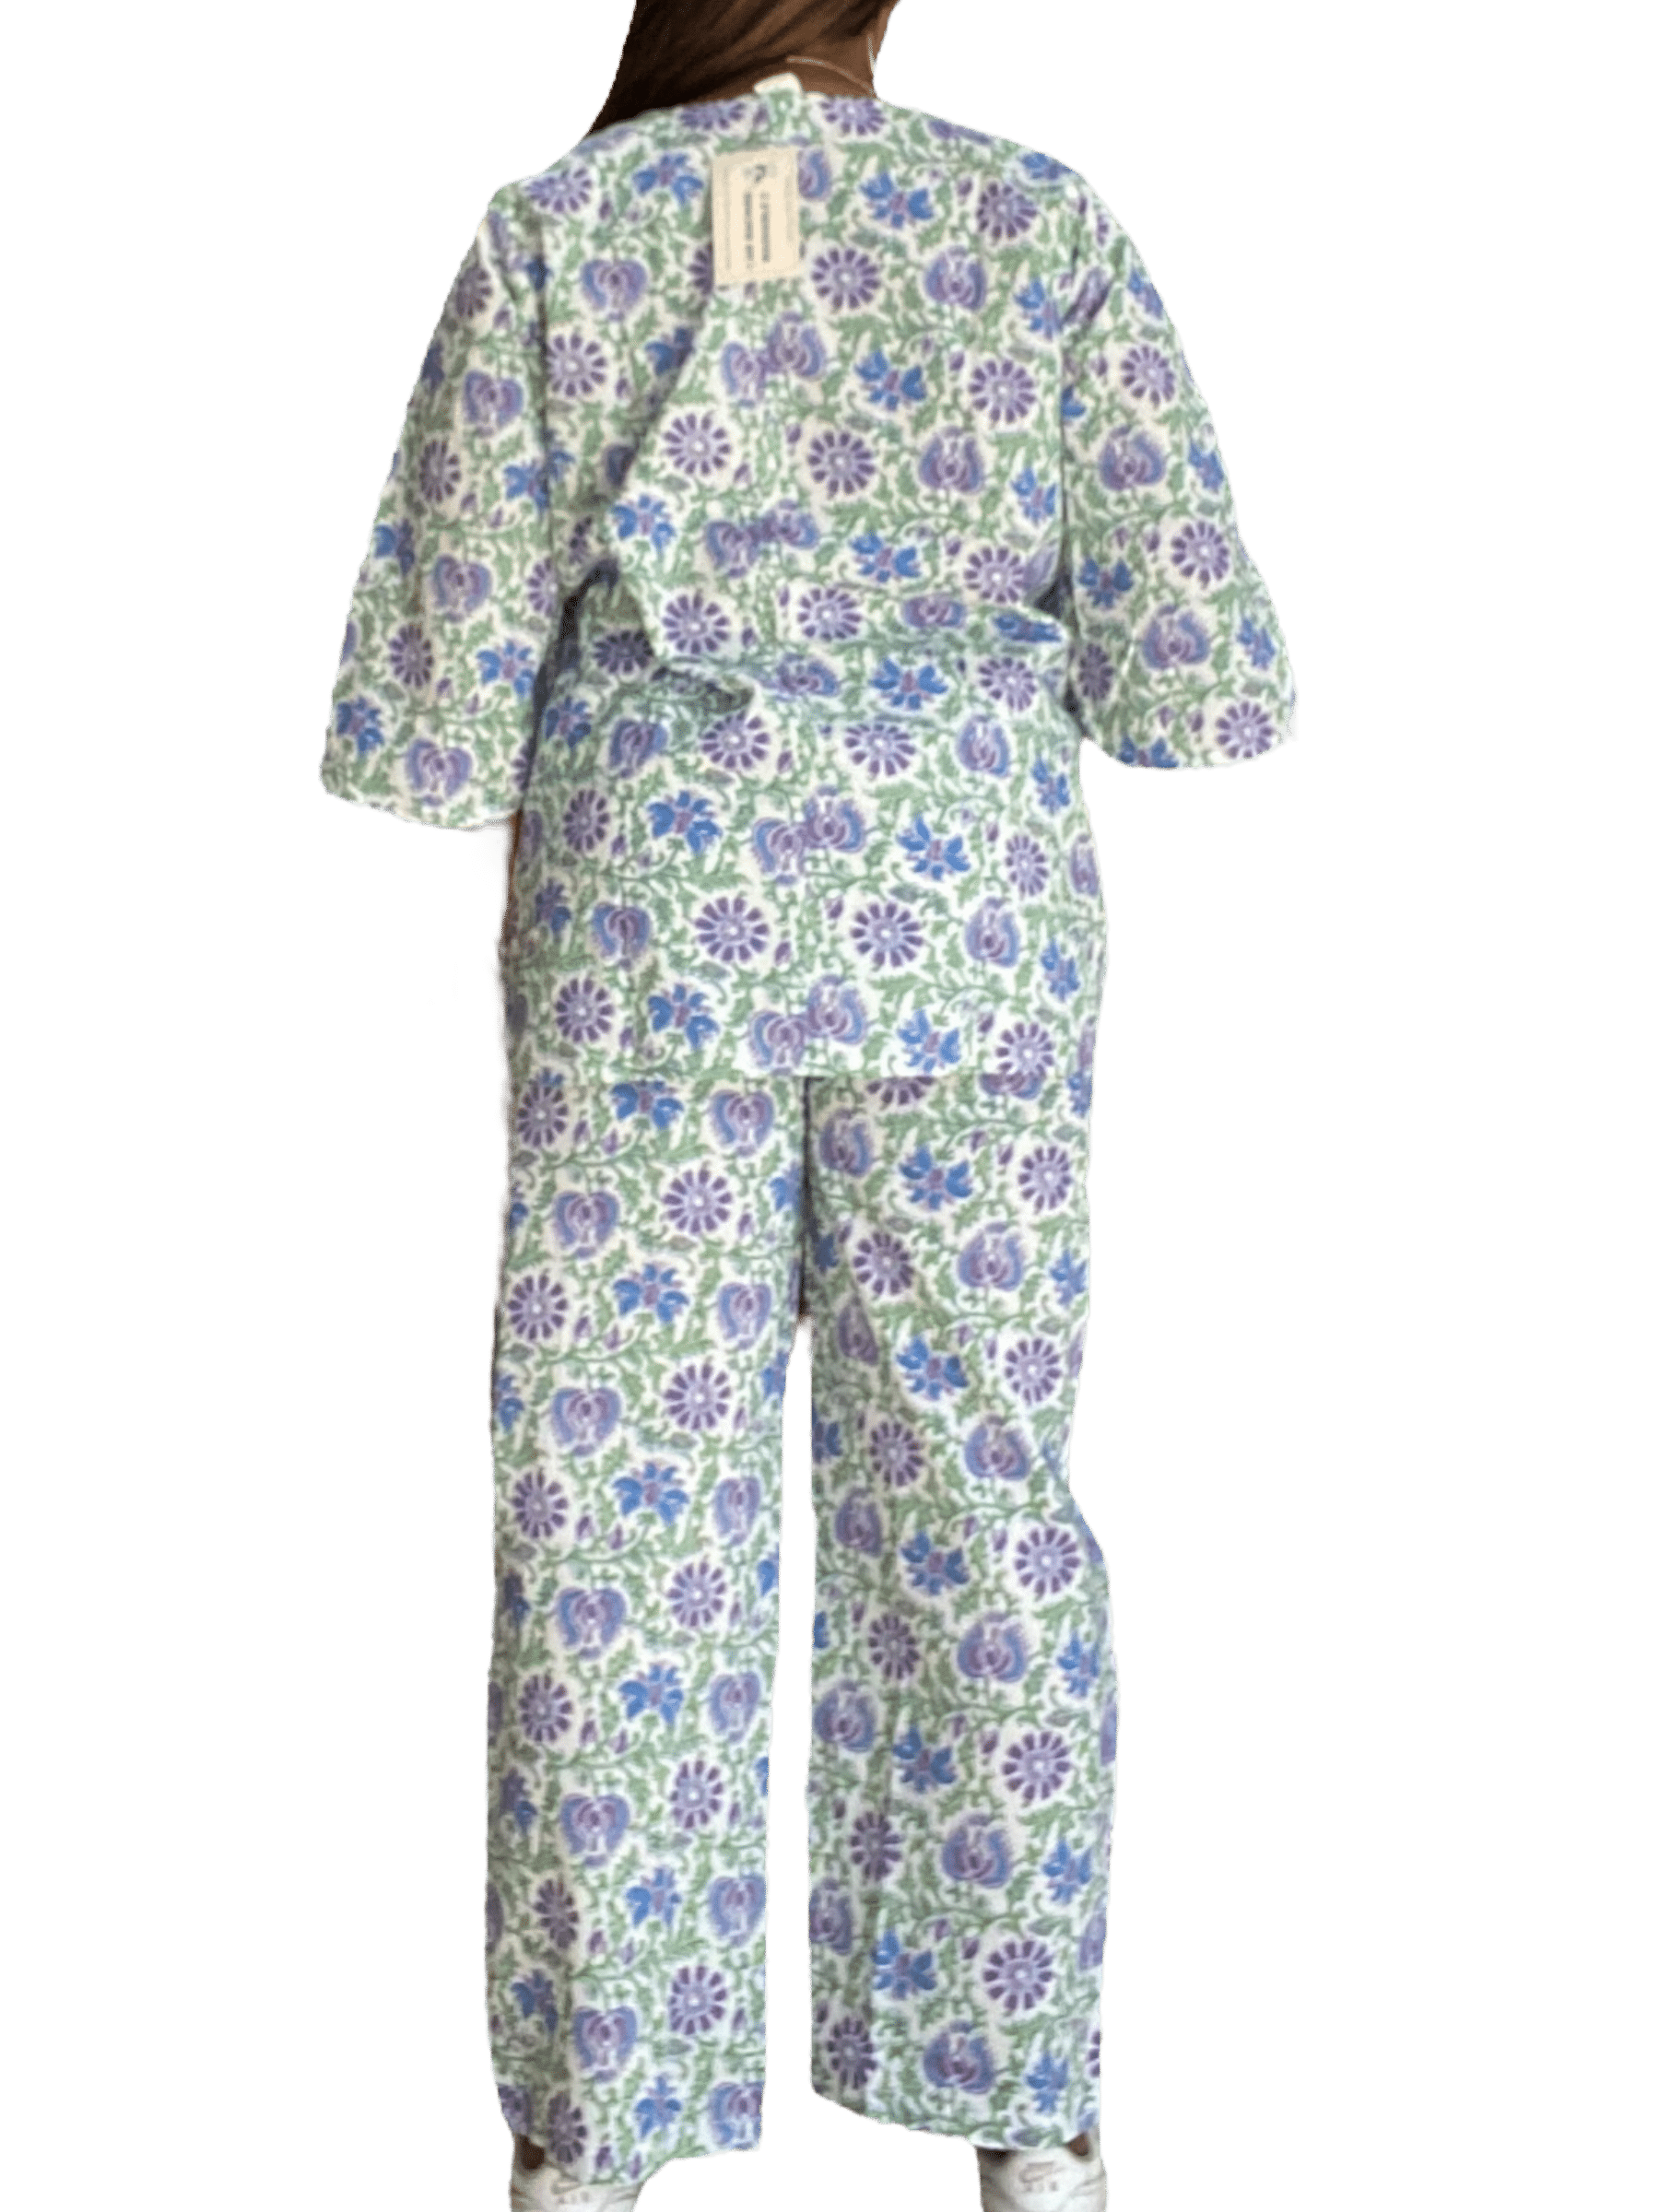 Tinkerbell Ultra Soft 100% Cotton Hand Printed Pyjamas